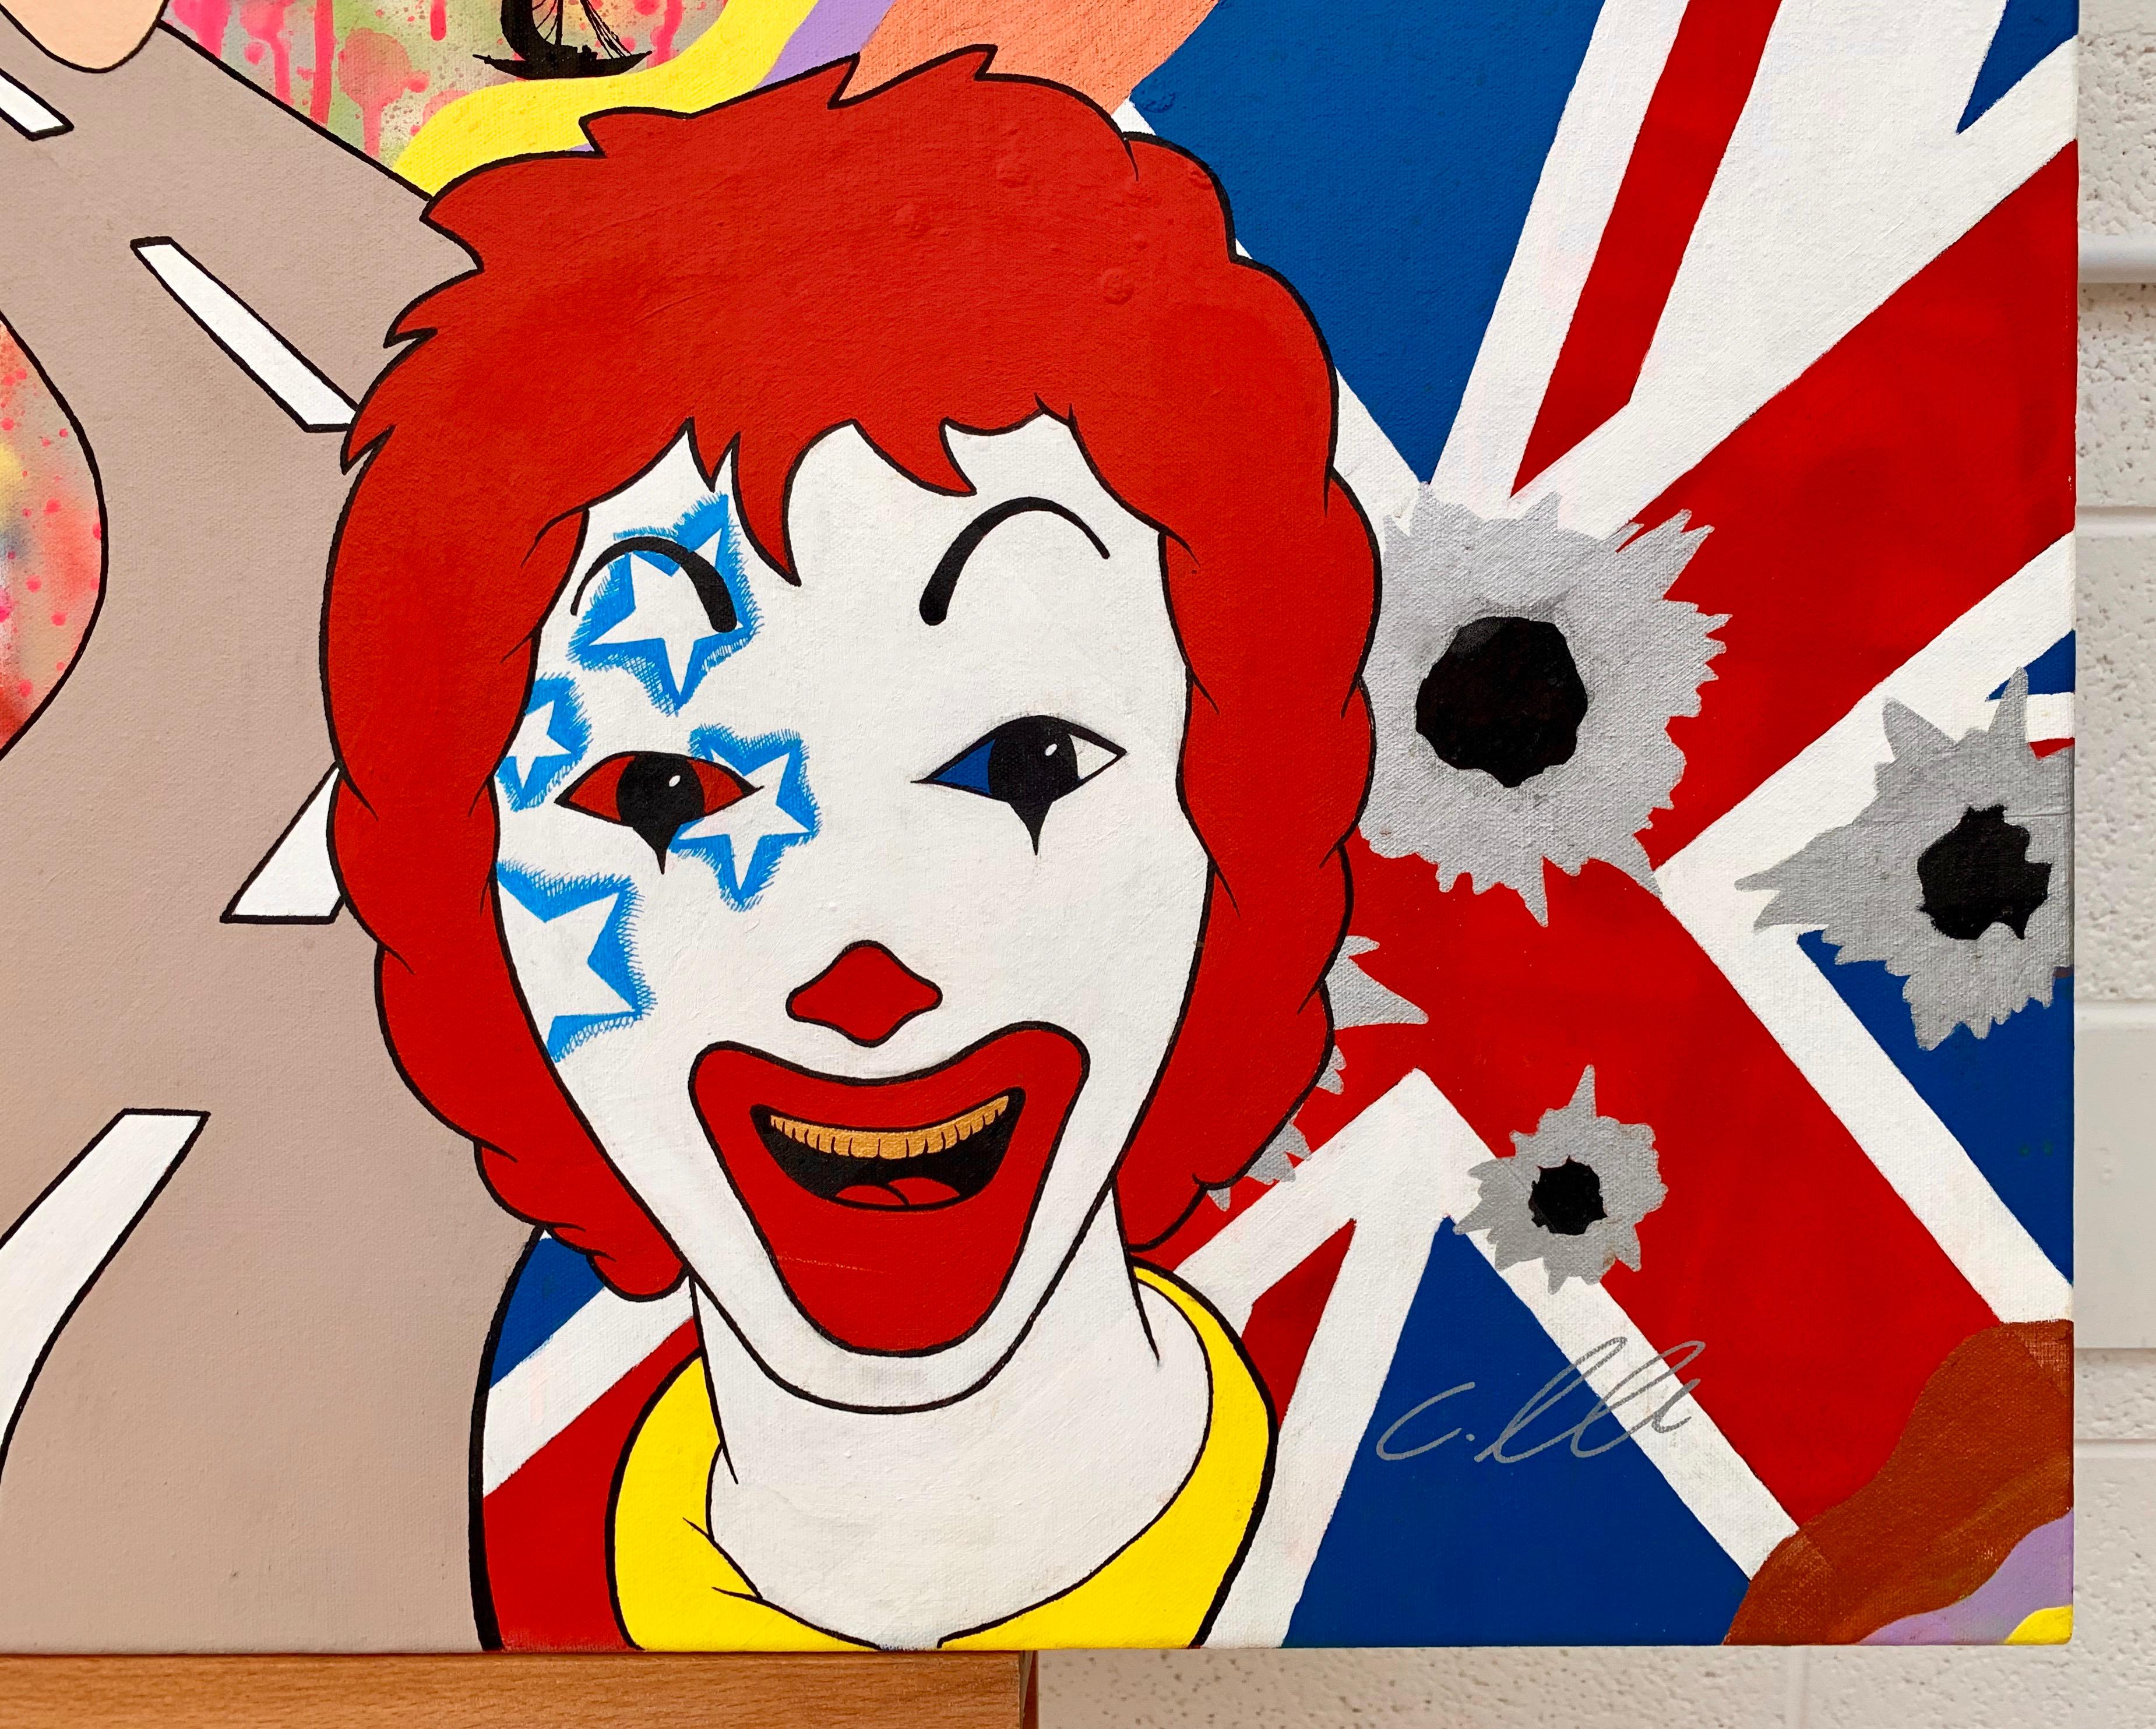 McFuture Colourful Manga Cartoon Pop Art by Young British Urban Graffiti Artist 2